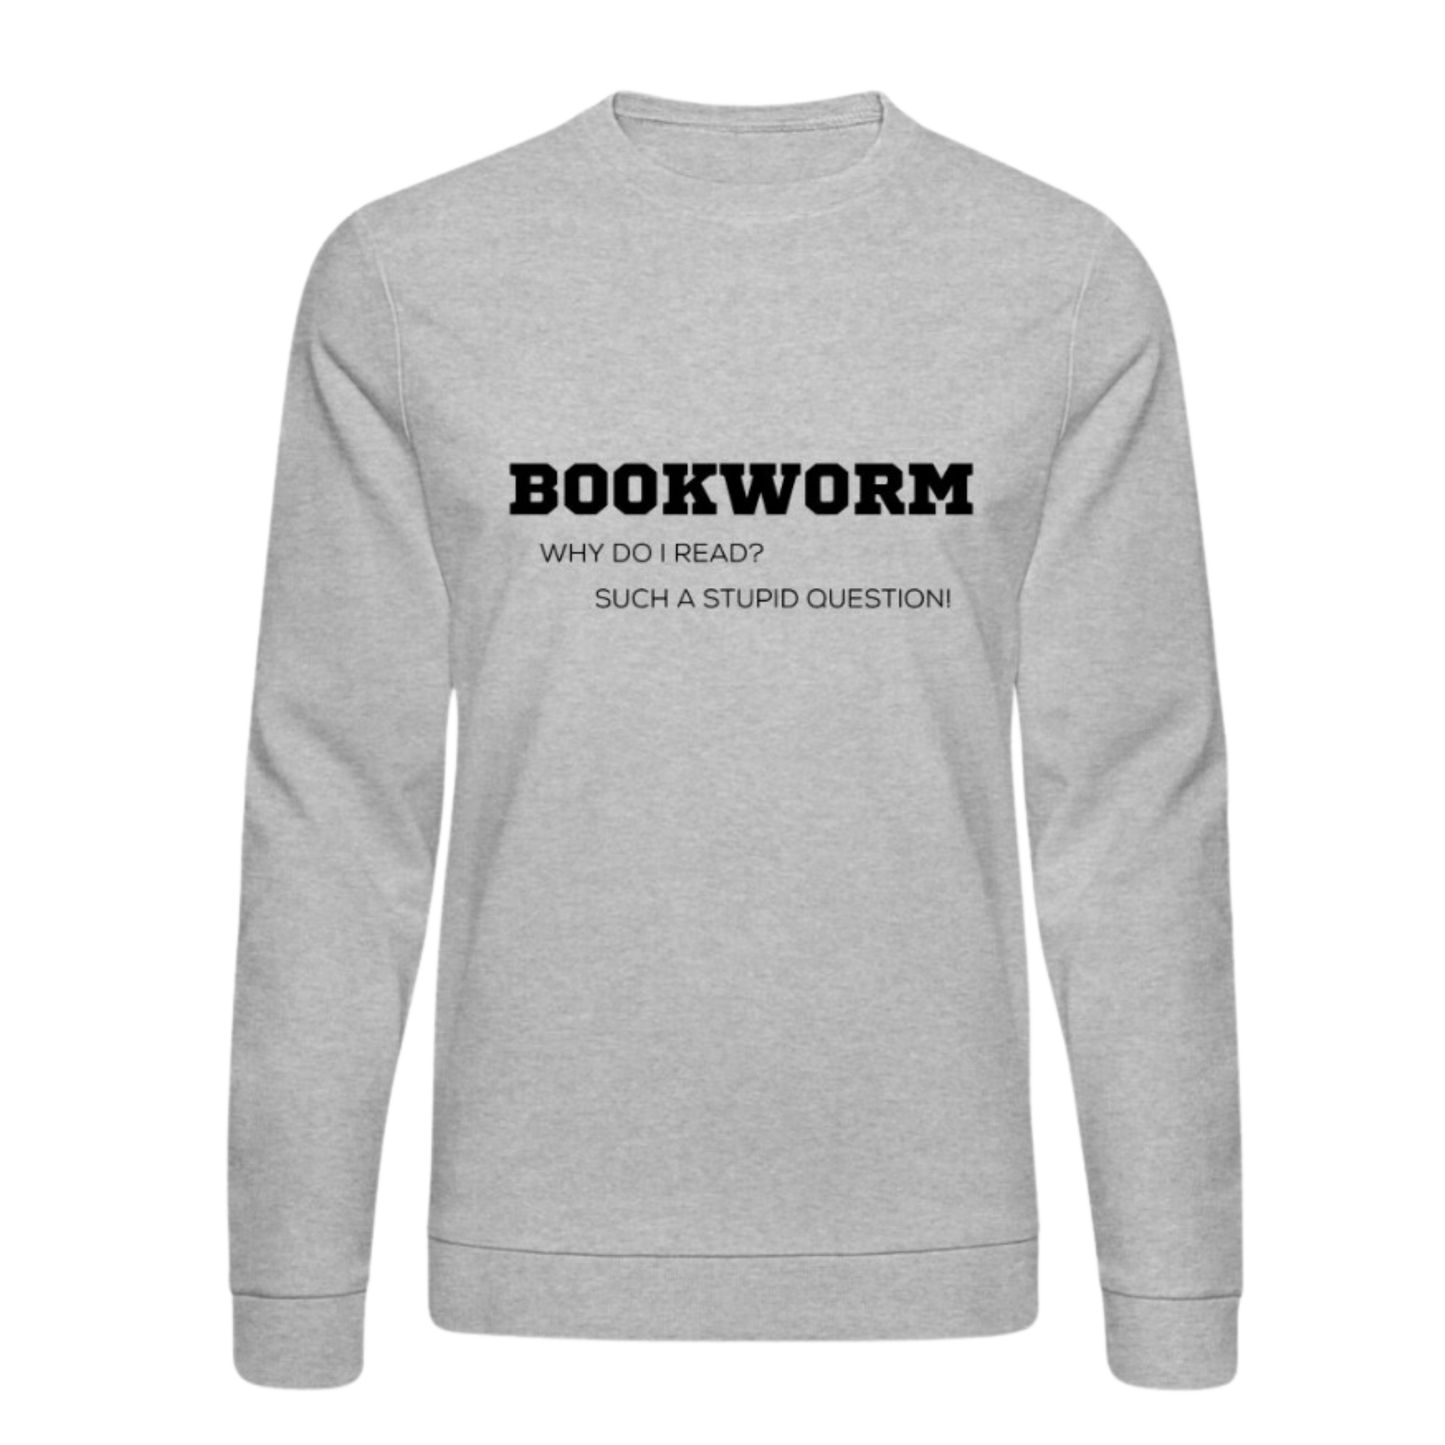 BOOKISH - Sweatshirts